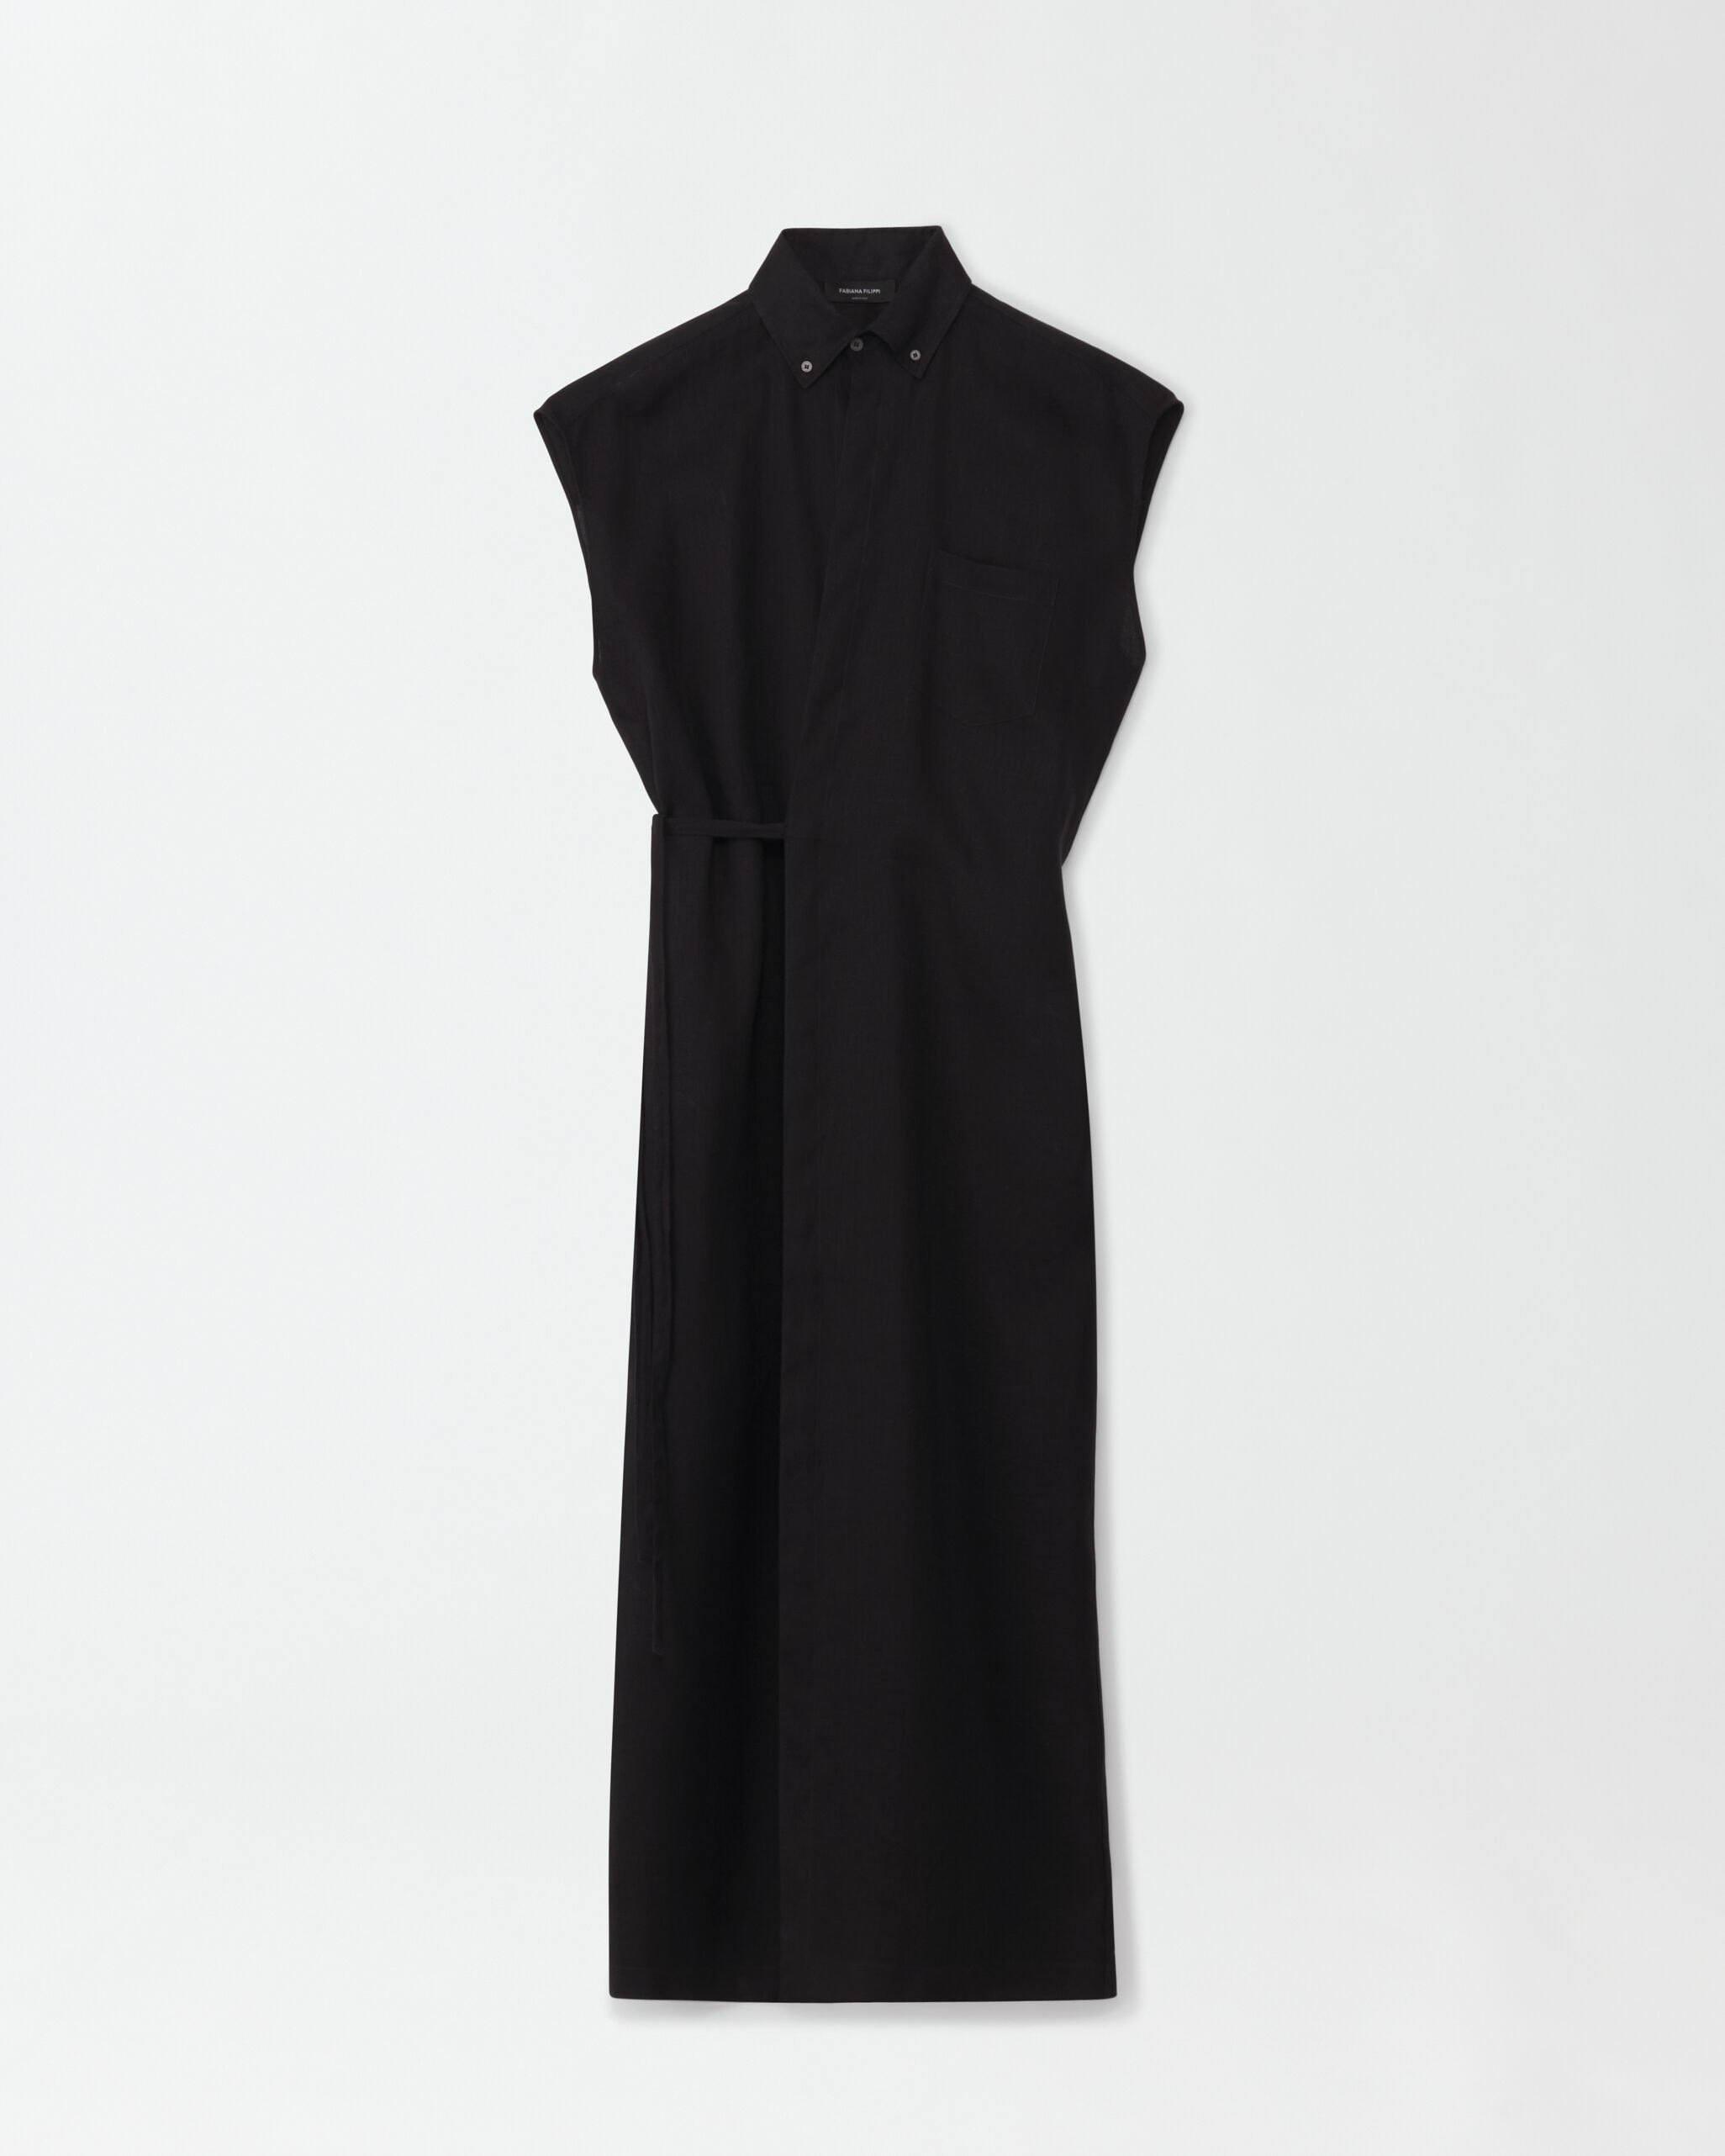 Fabiana Filippi LINEN CLOTH ROBE DRESS WITH SHIRT COLLAR AND CHEST POCKET BLACK ABD274F478D6610000